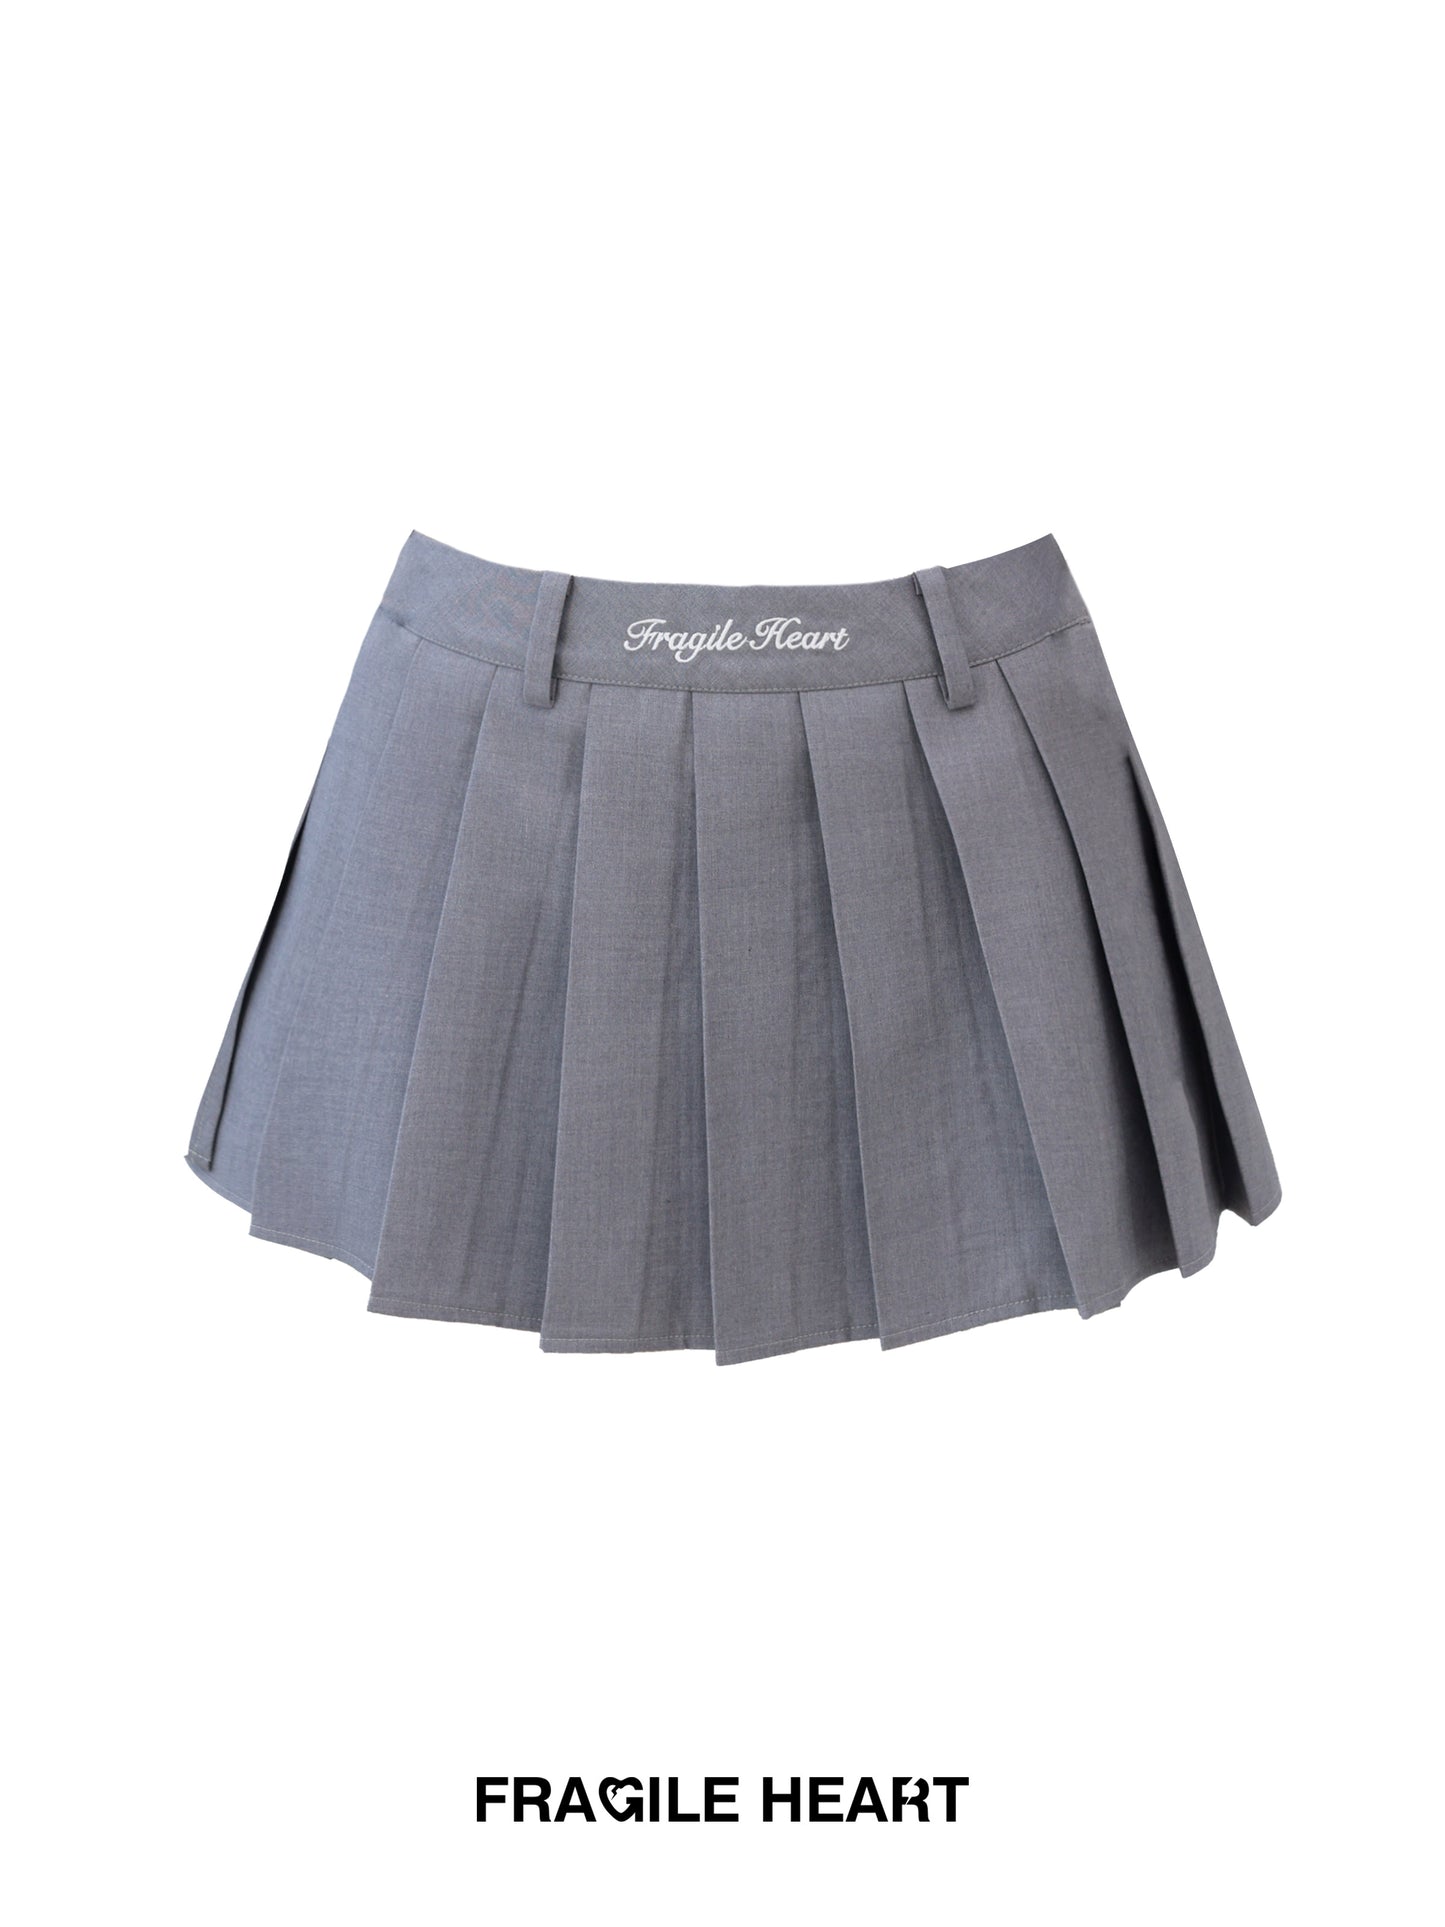 Short Sleeve Top Skirt Two-Piece Set